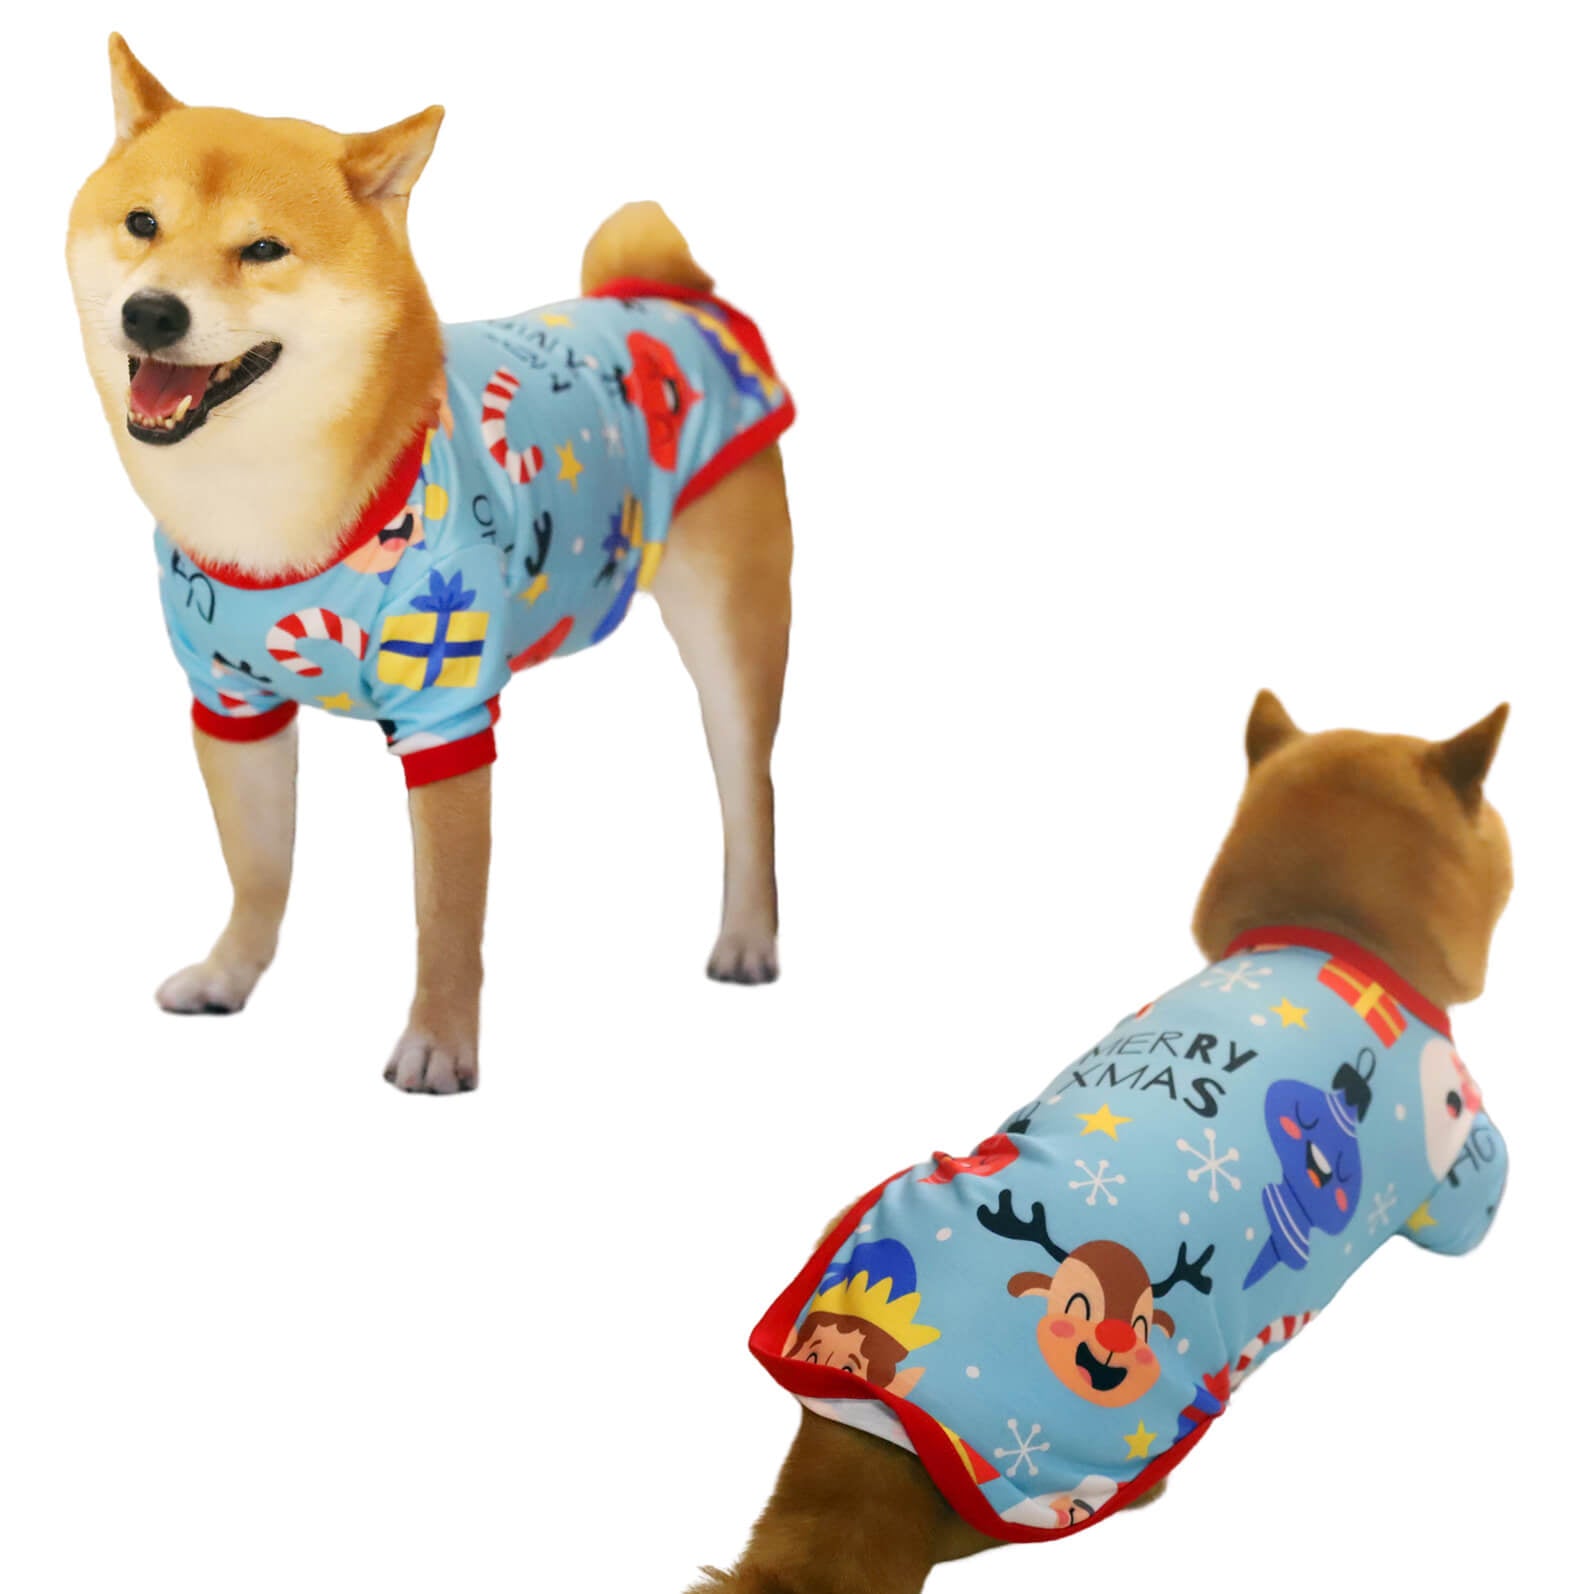 Merry Xmas Star Cartoon Character Gift Print Pet Pajamas Blue Dog Christmas Clothes